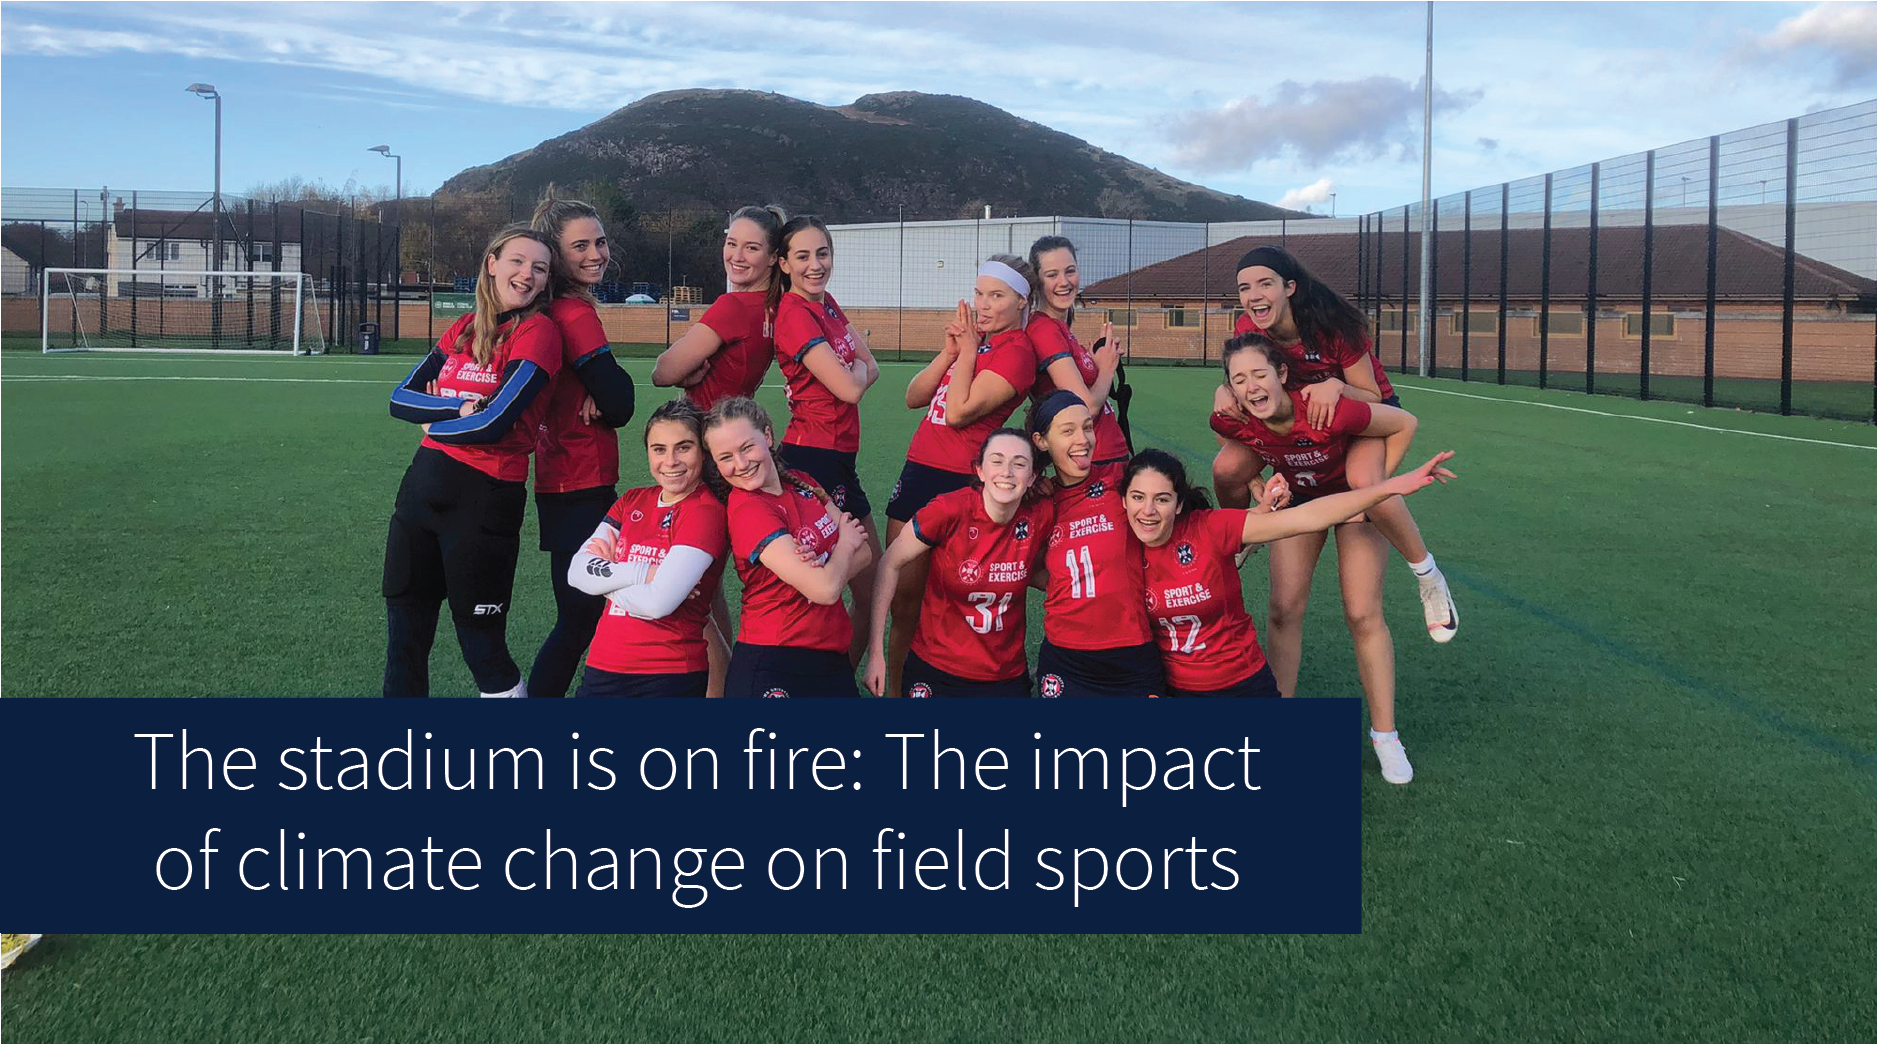 The stadium is on fire: The impact of climate change on field sports, University's Edinburgh Women’s Lacrosse Club